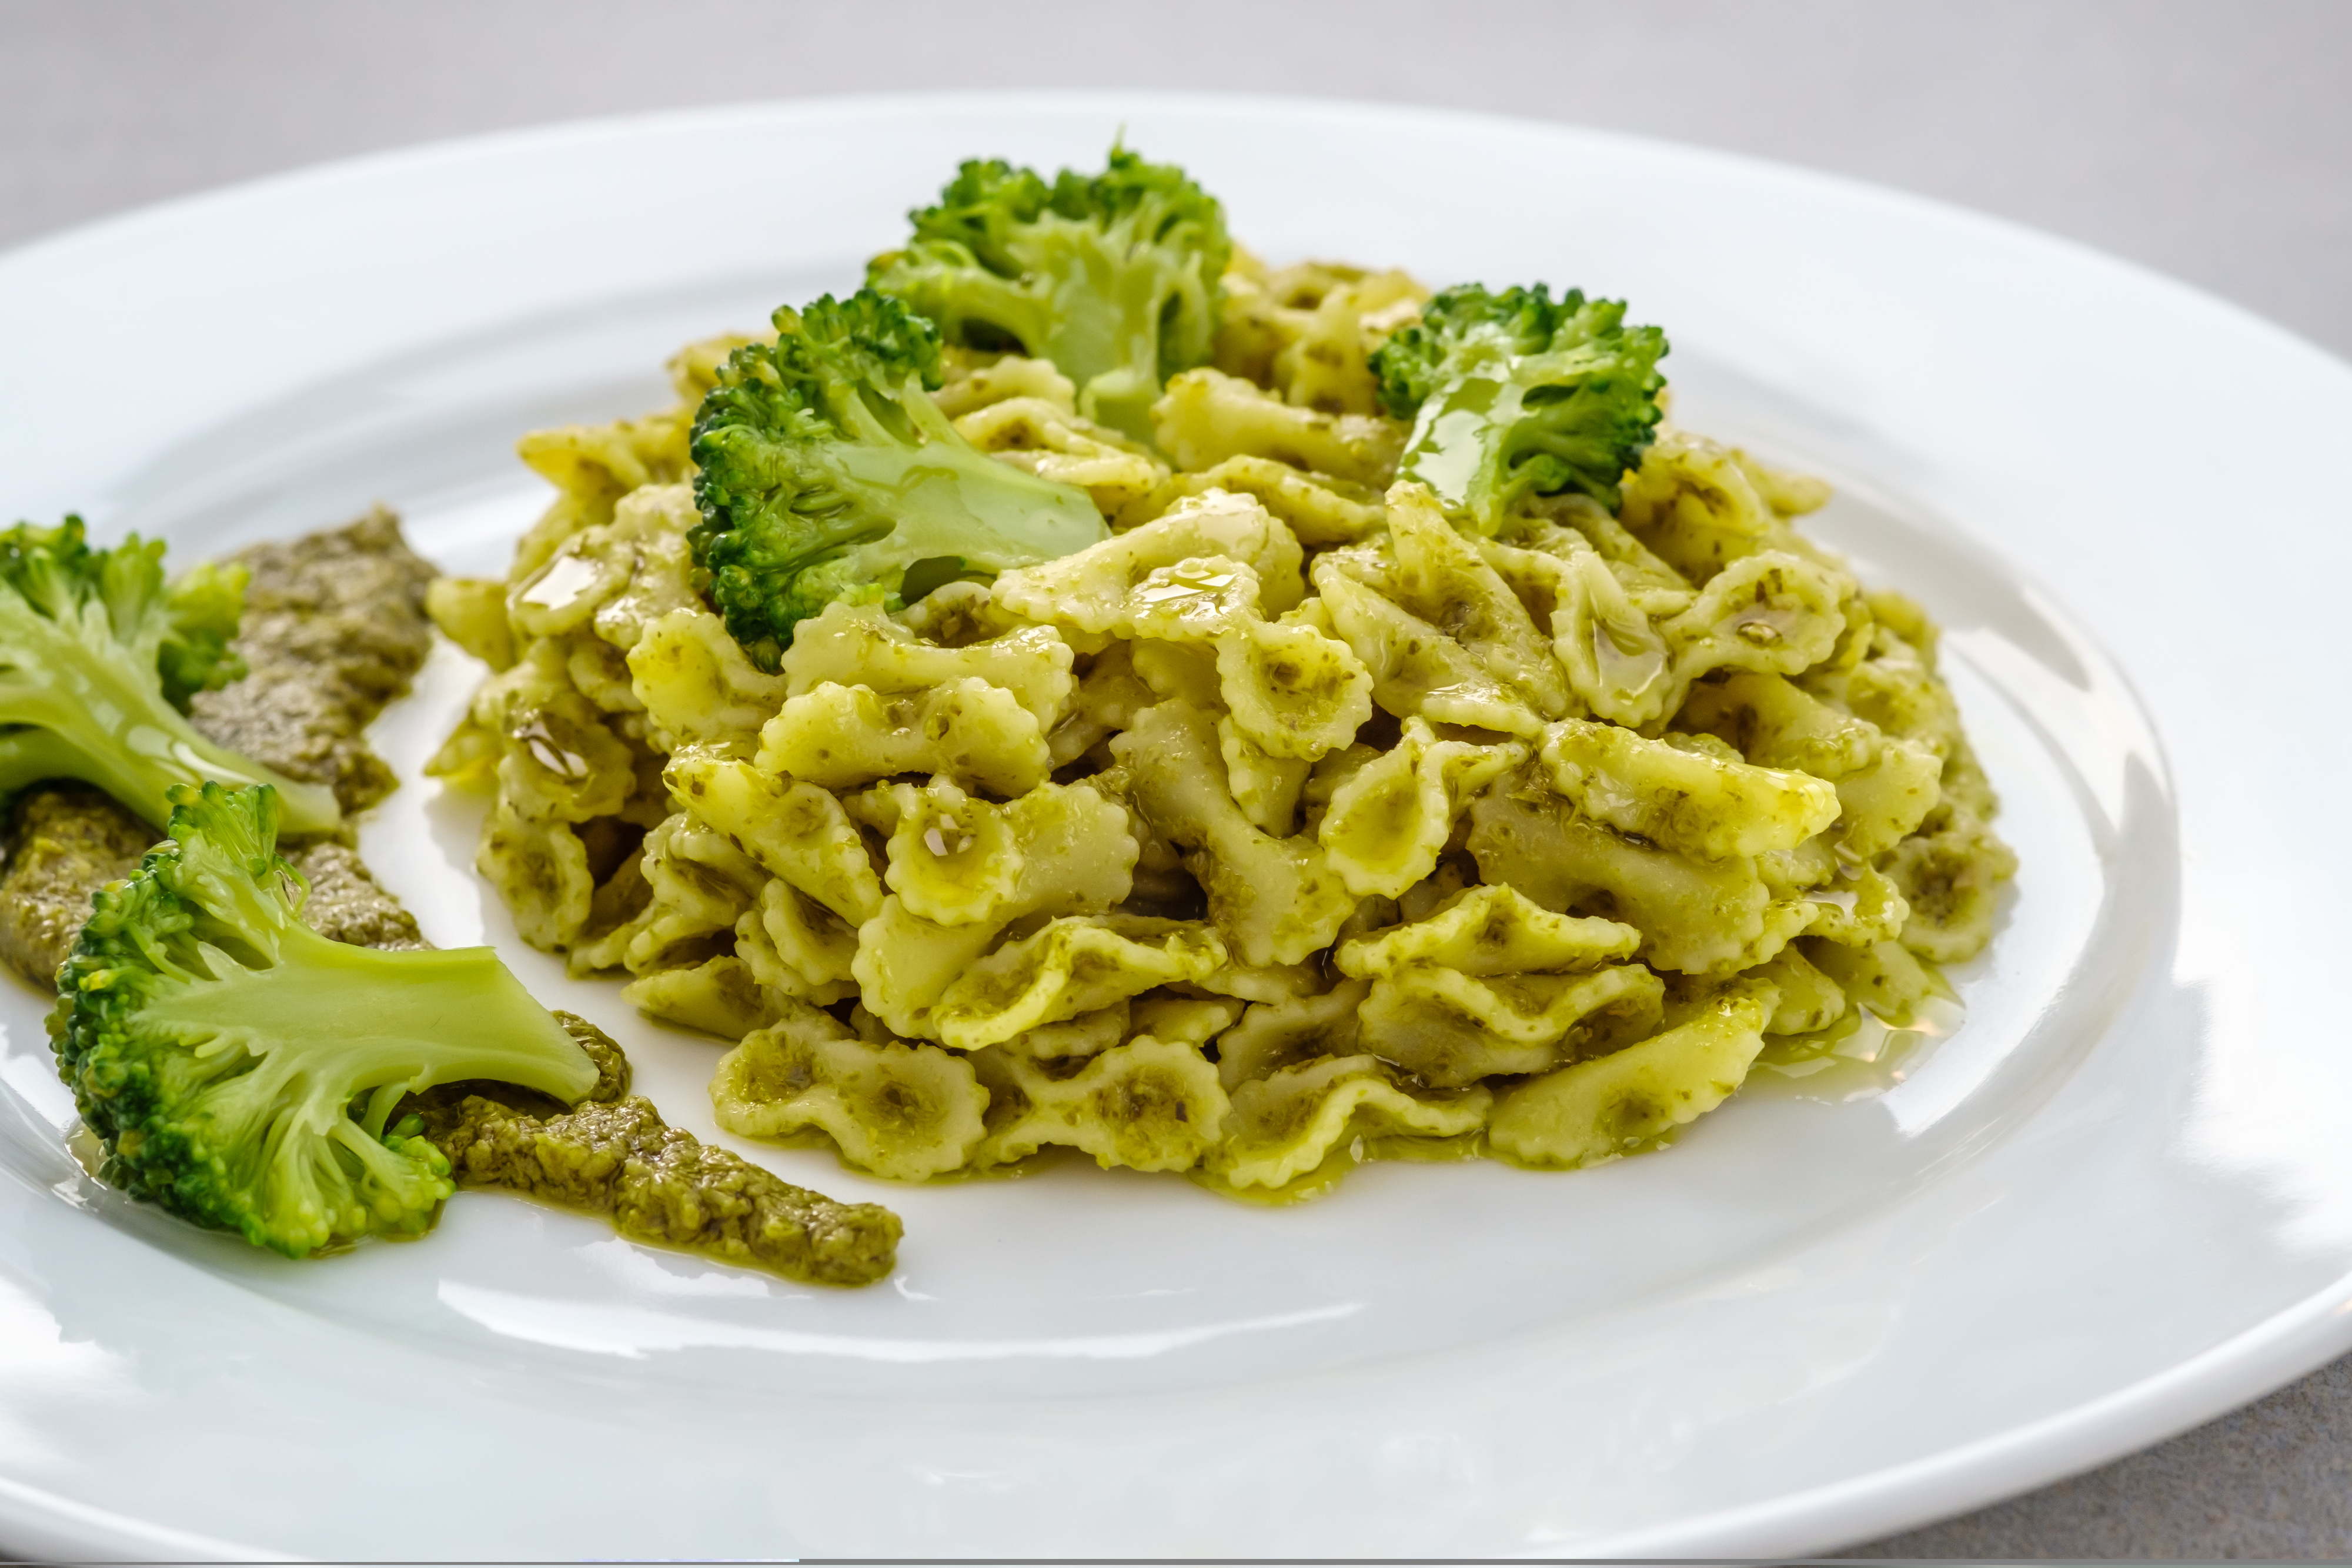 Bow tie pasta with broccoli